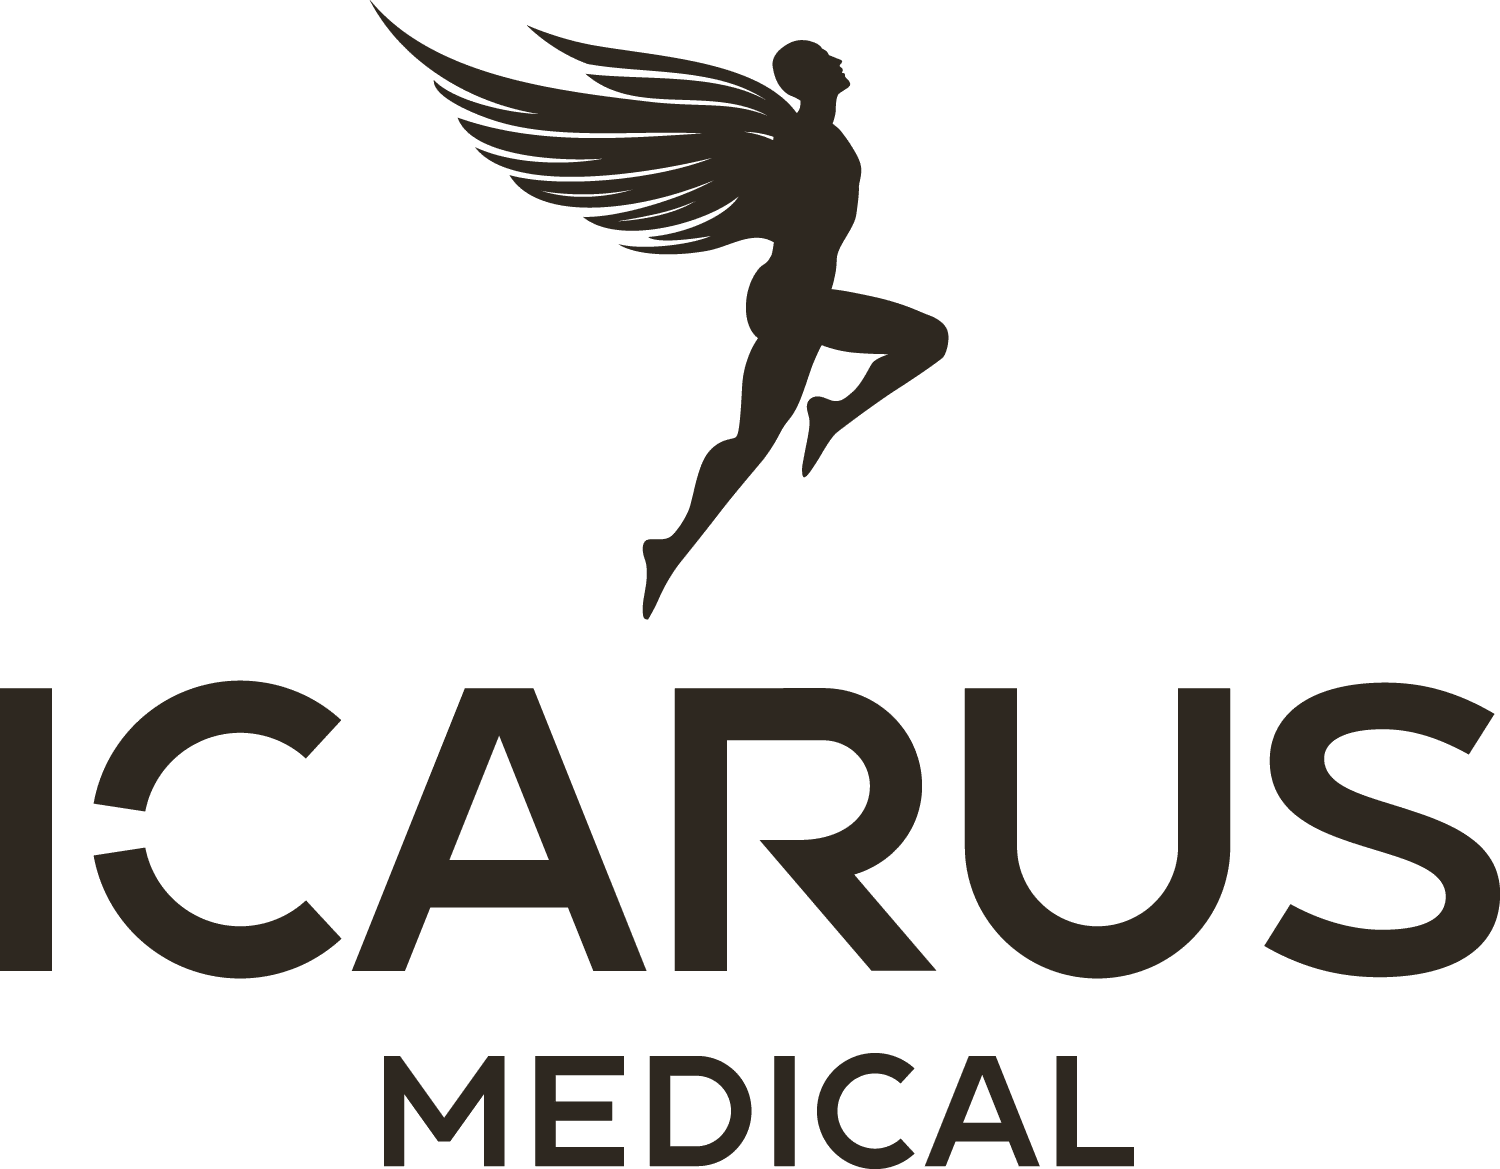 Icarus Medical logo gray